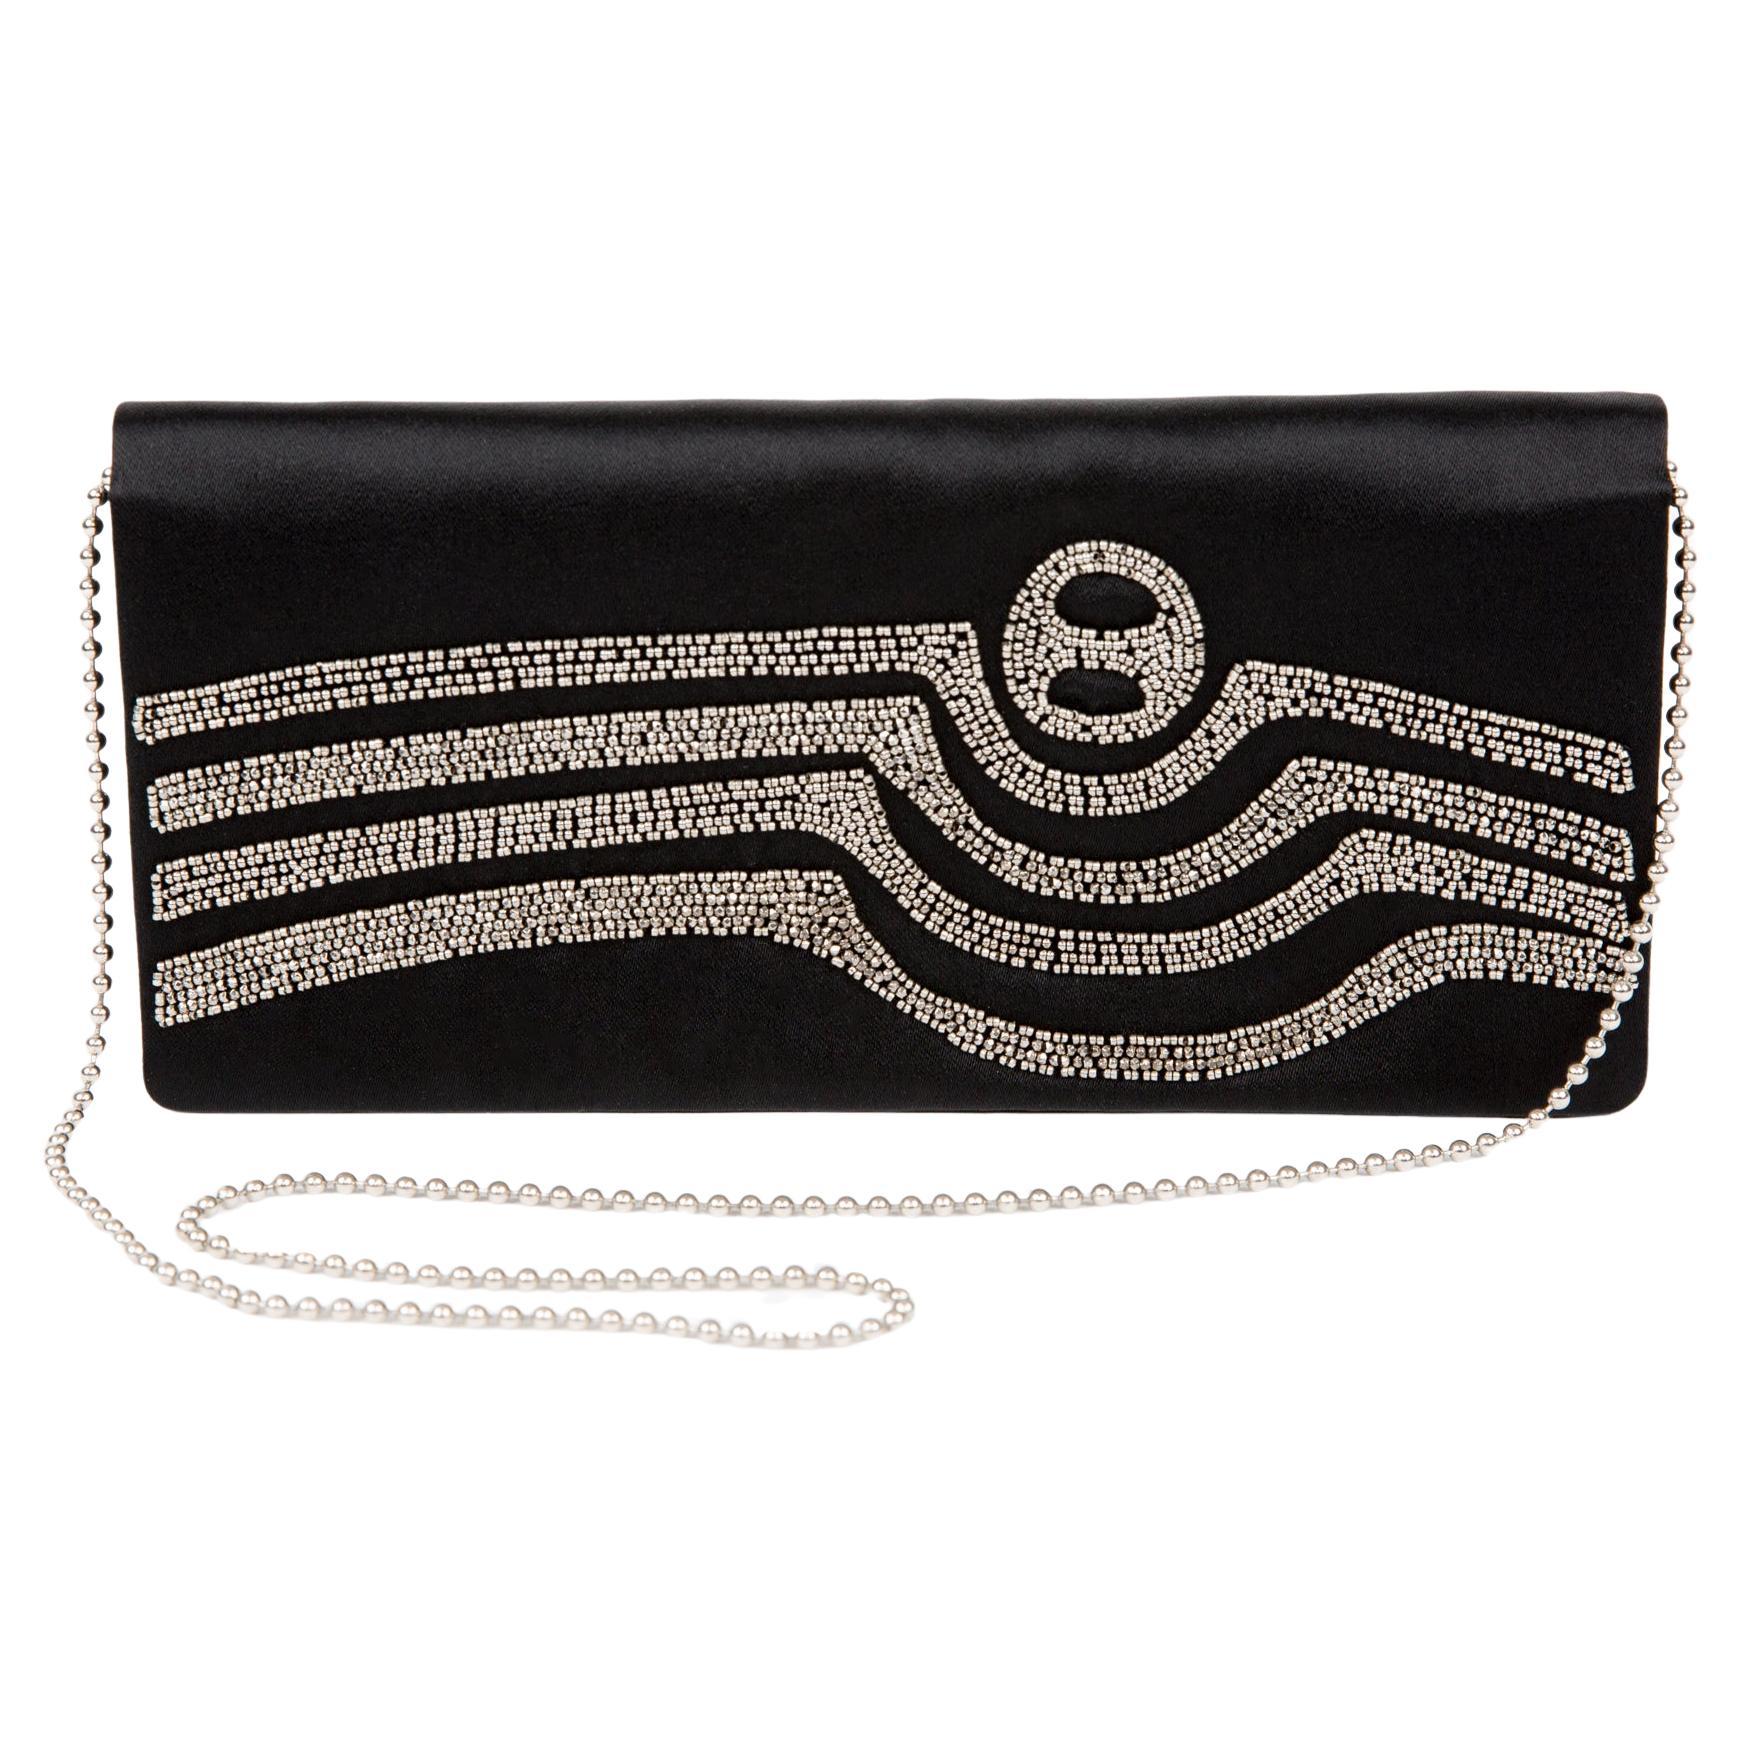 Pierre Cardin Black Silk Evening Clutch Bag For Sale